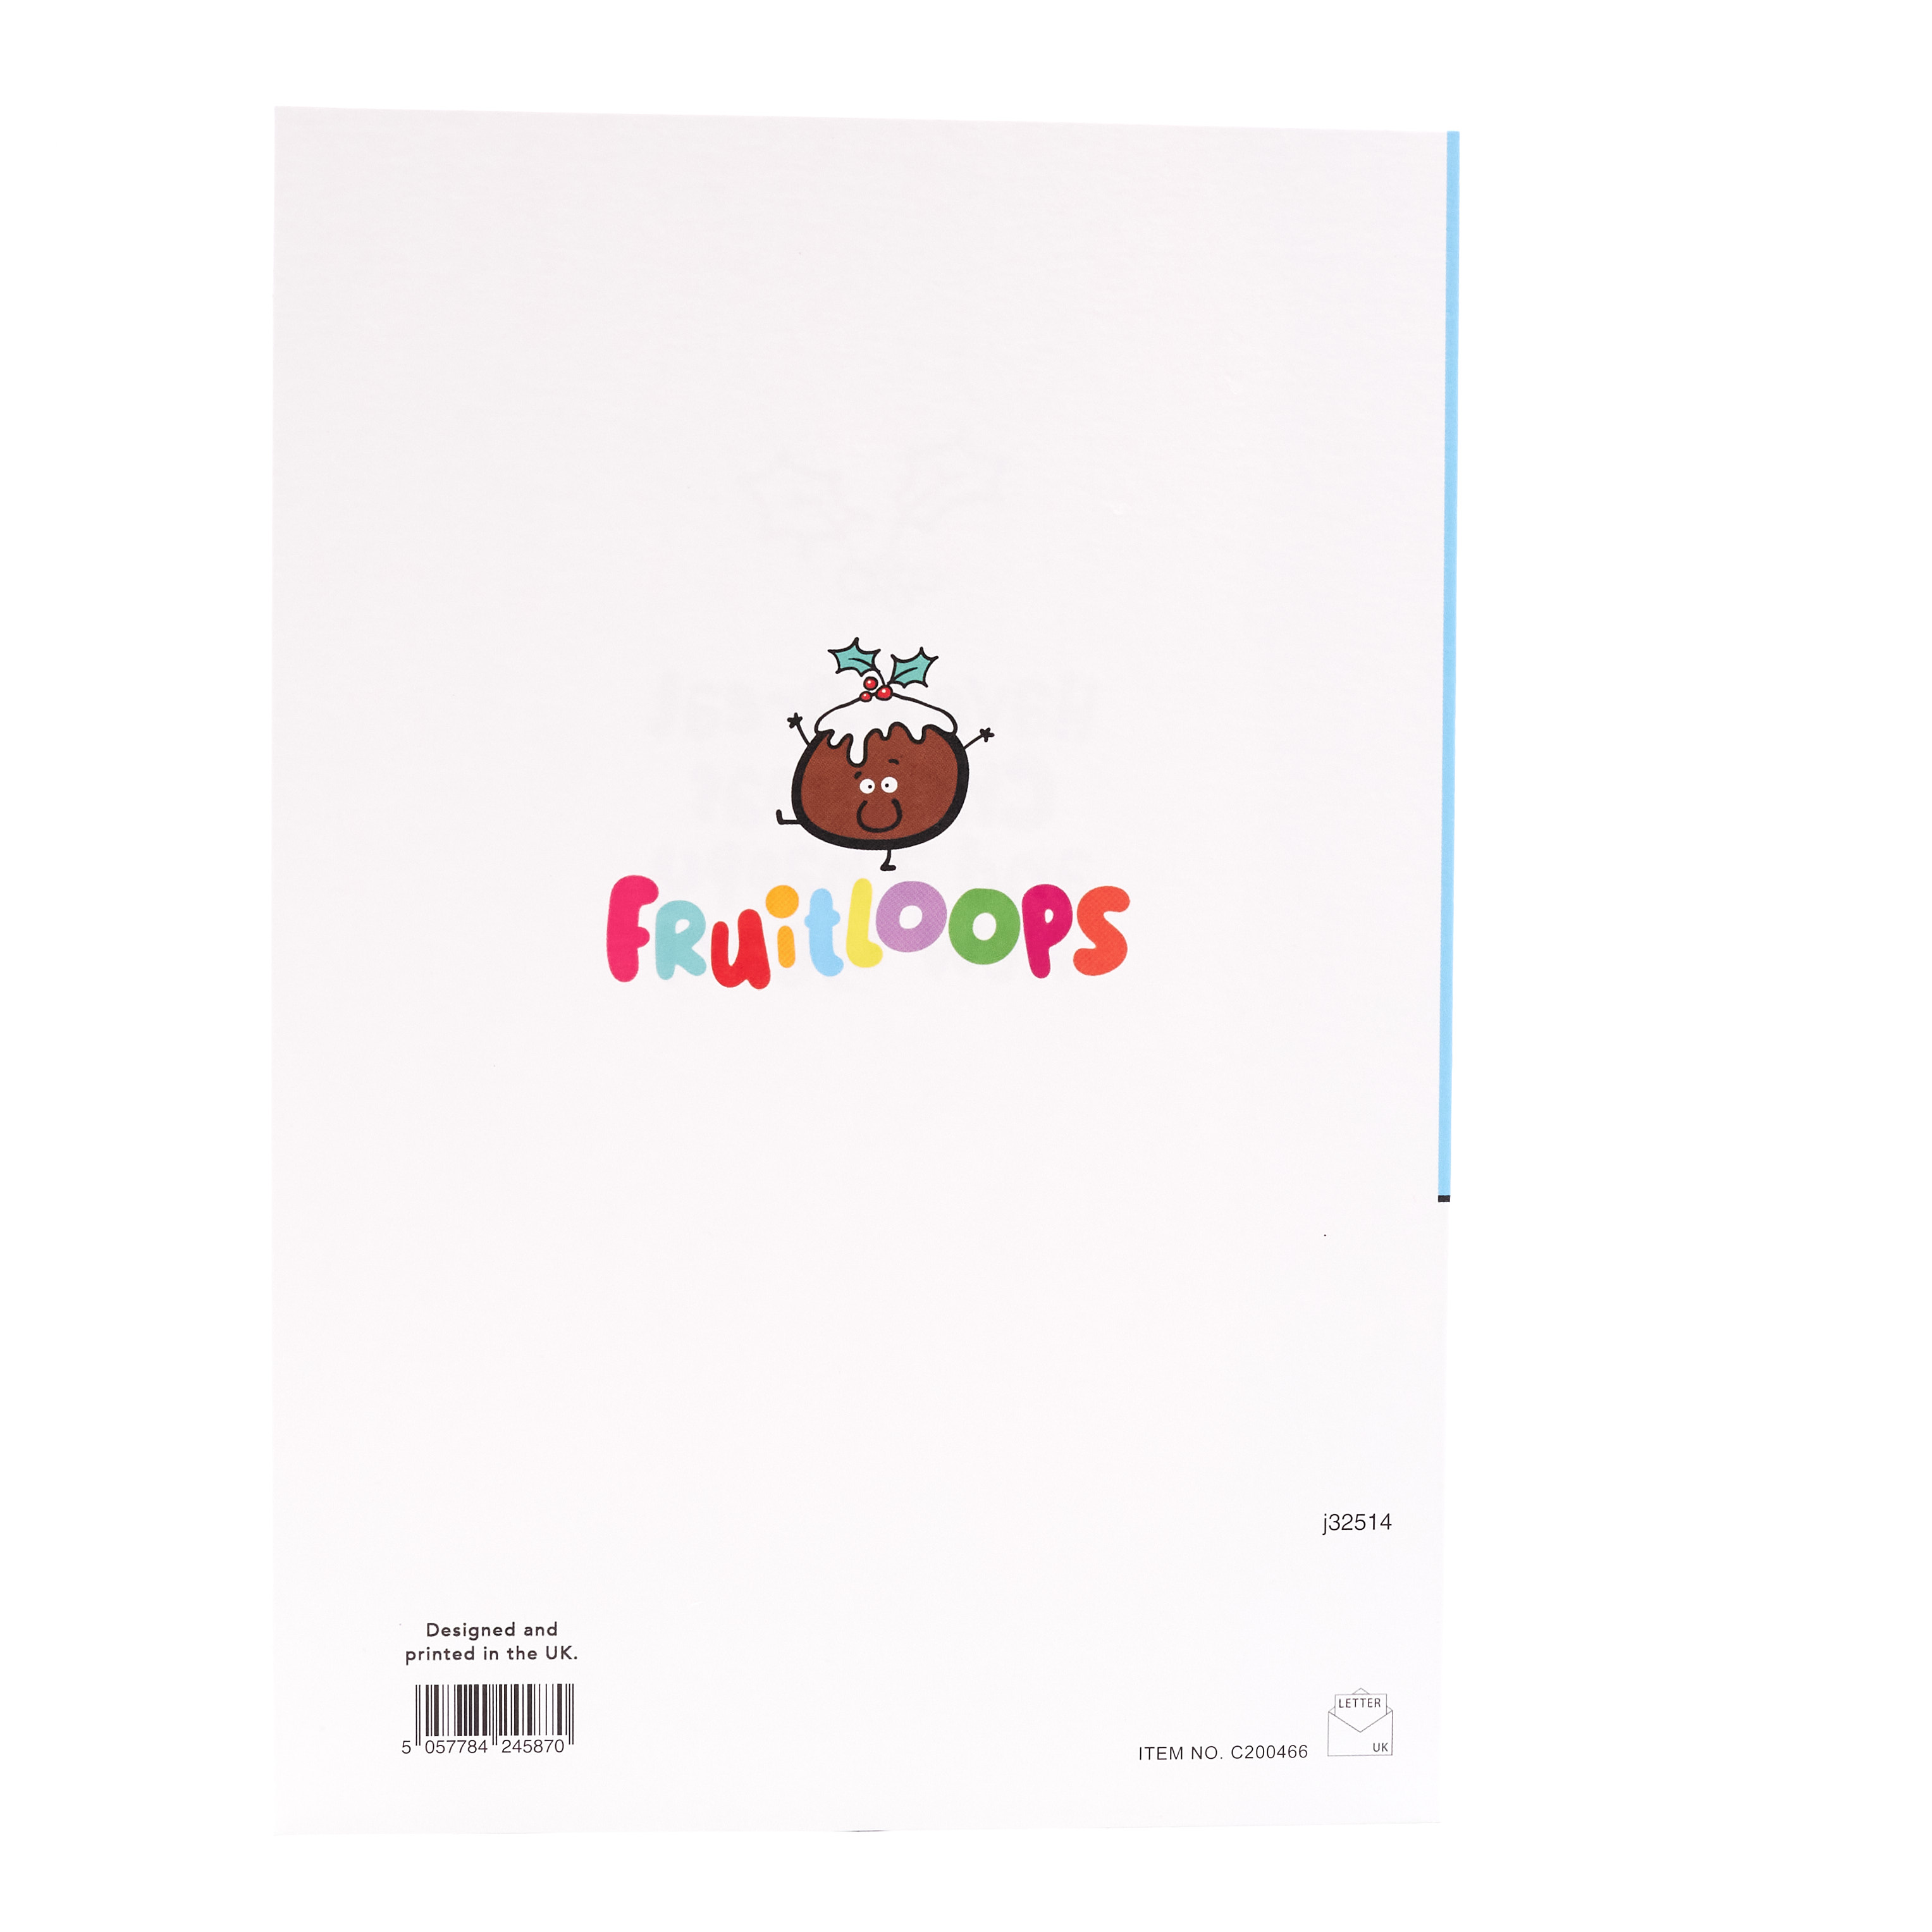 Fruitloops Christmas Card - Snow Cool Grandson